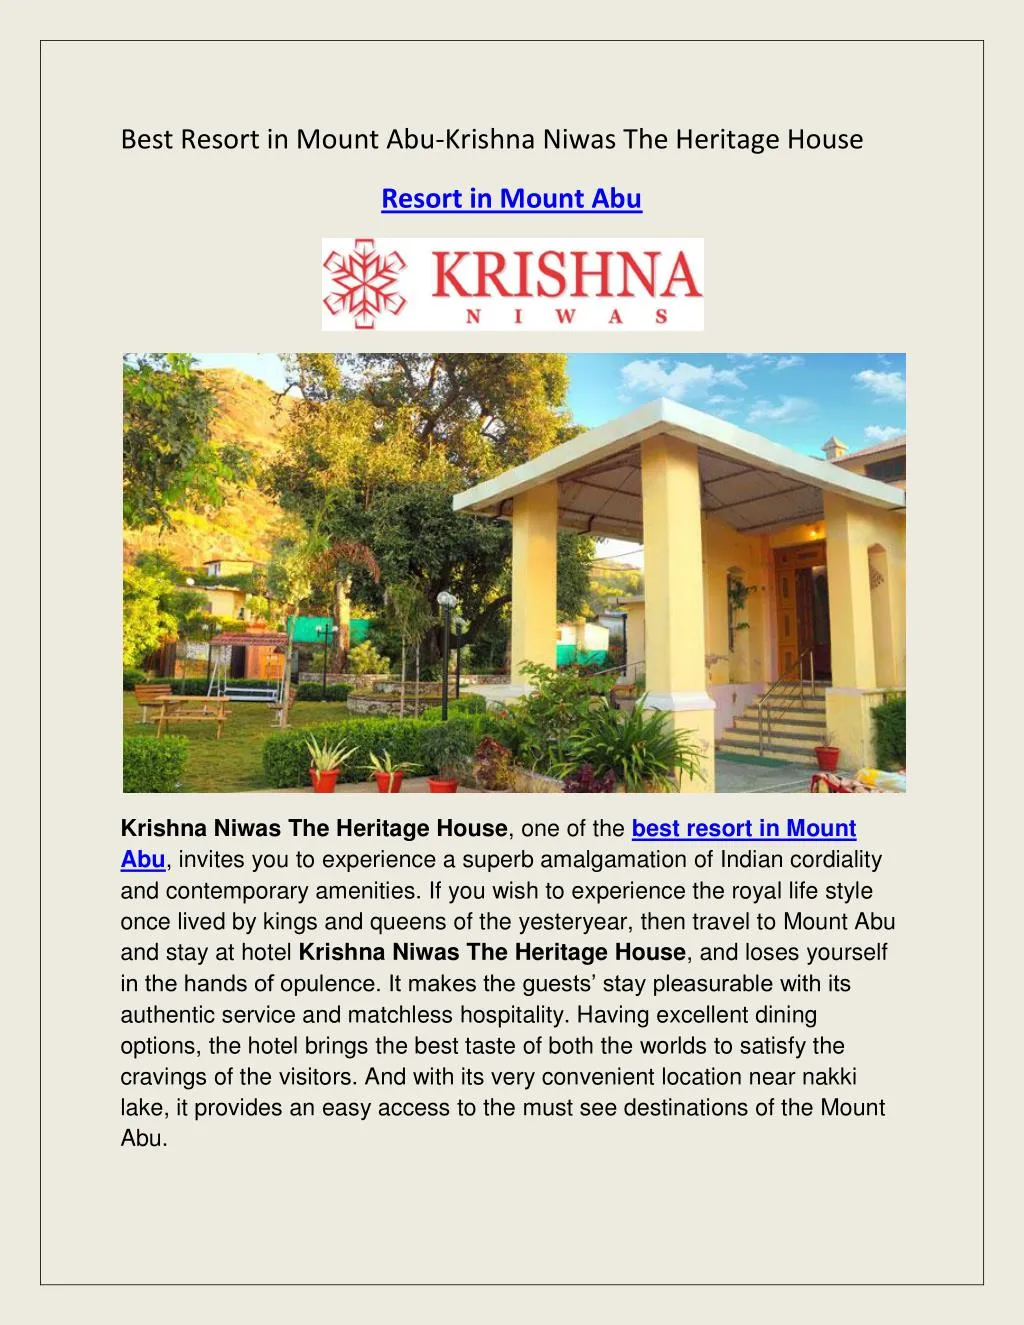 best resort in mount abu krishna niwas